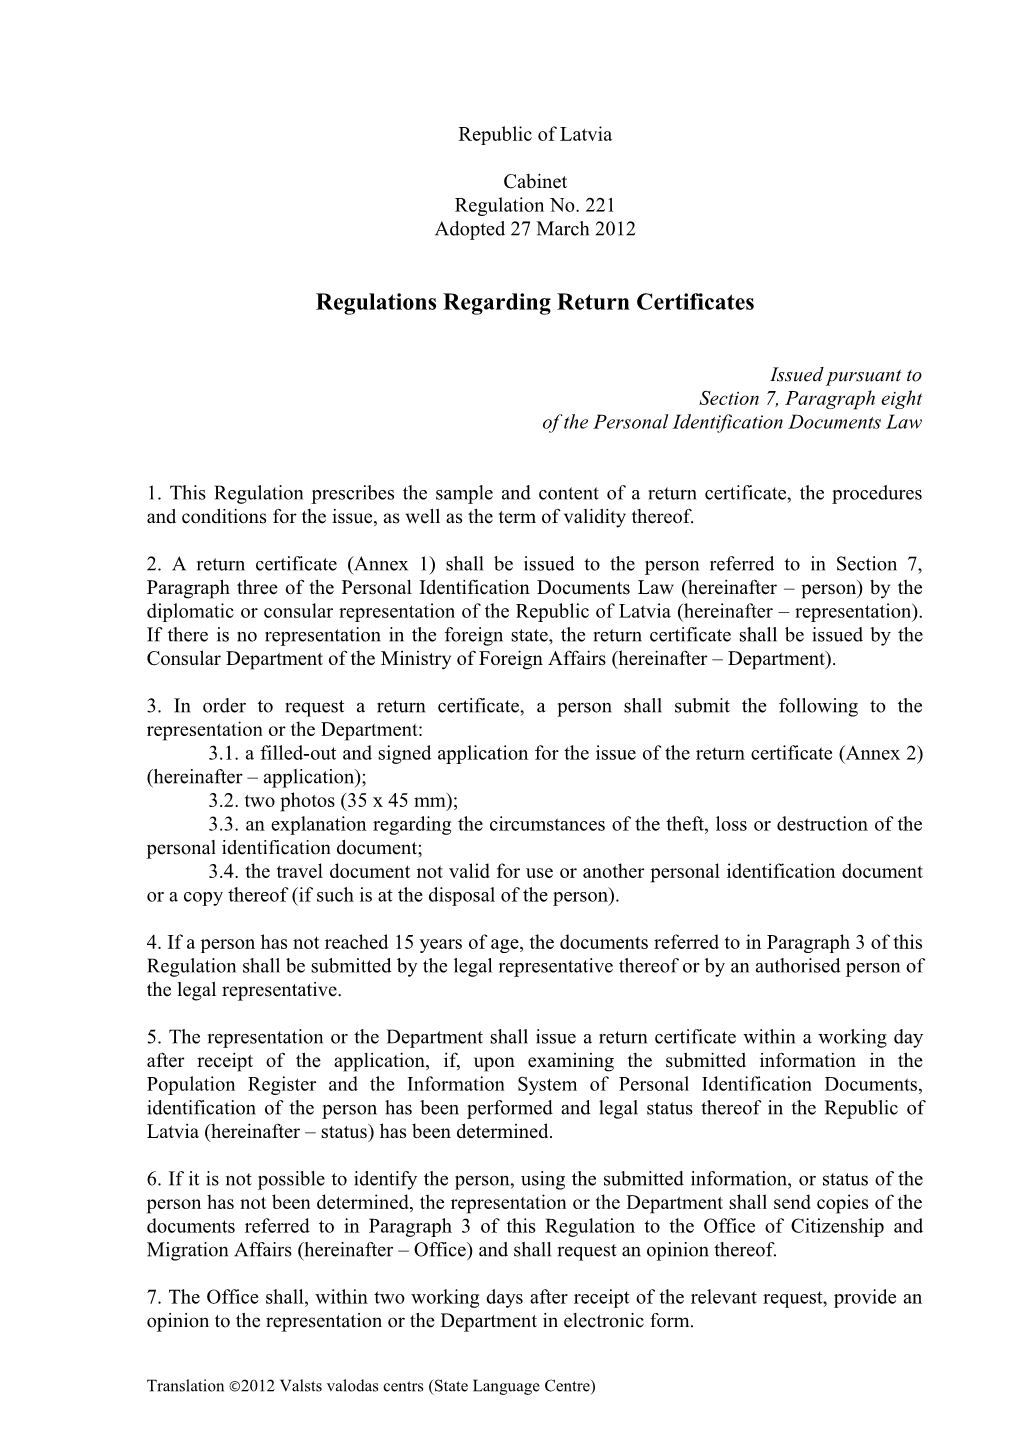 Regulations Regarding Return Certificates